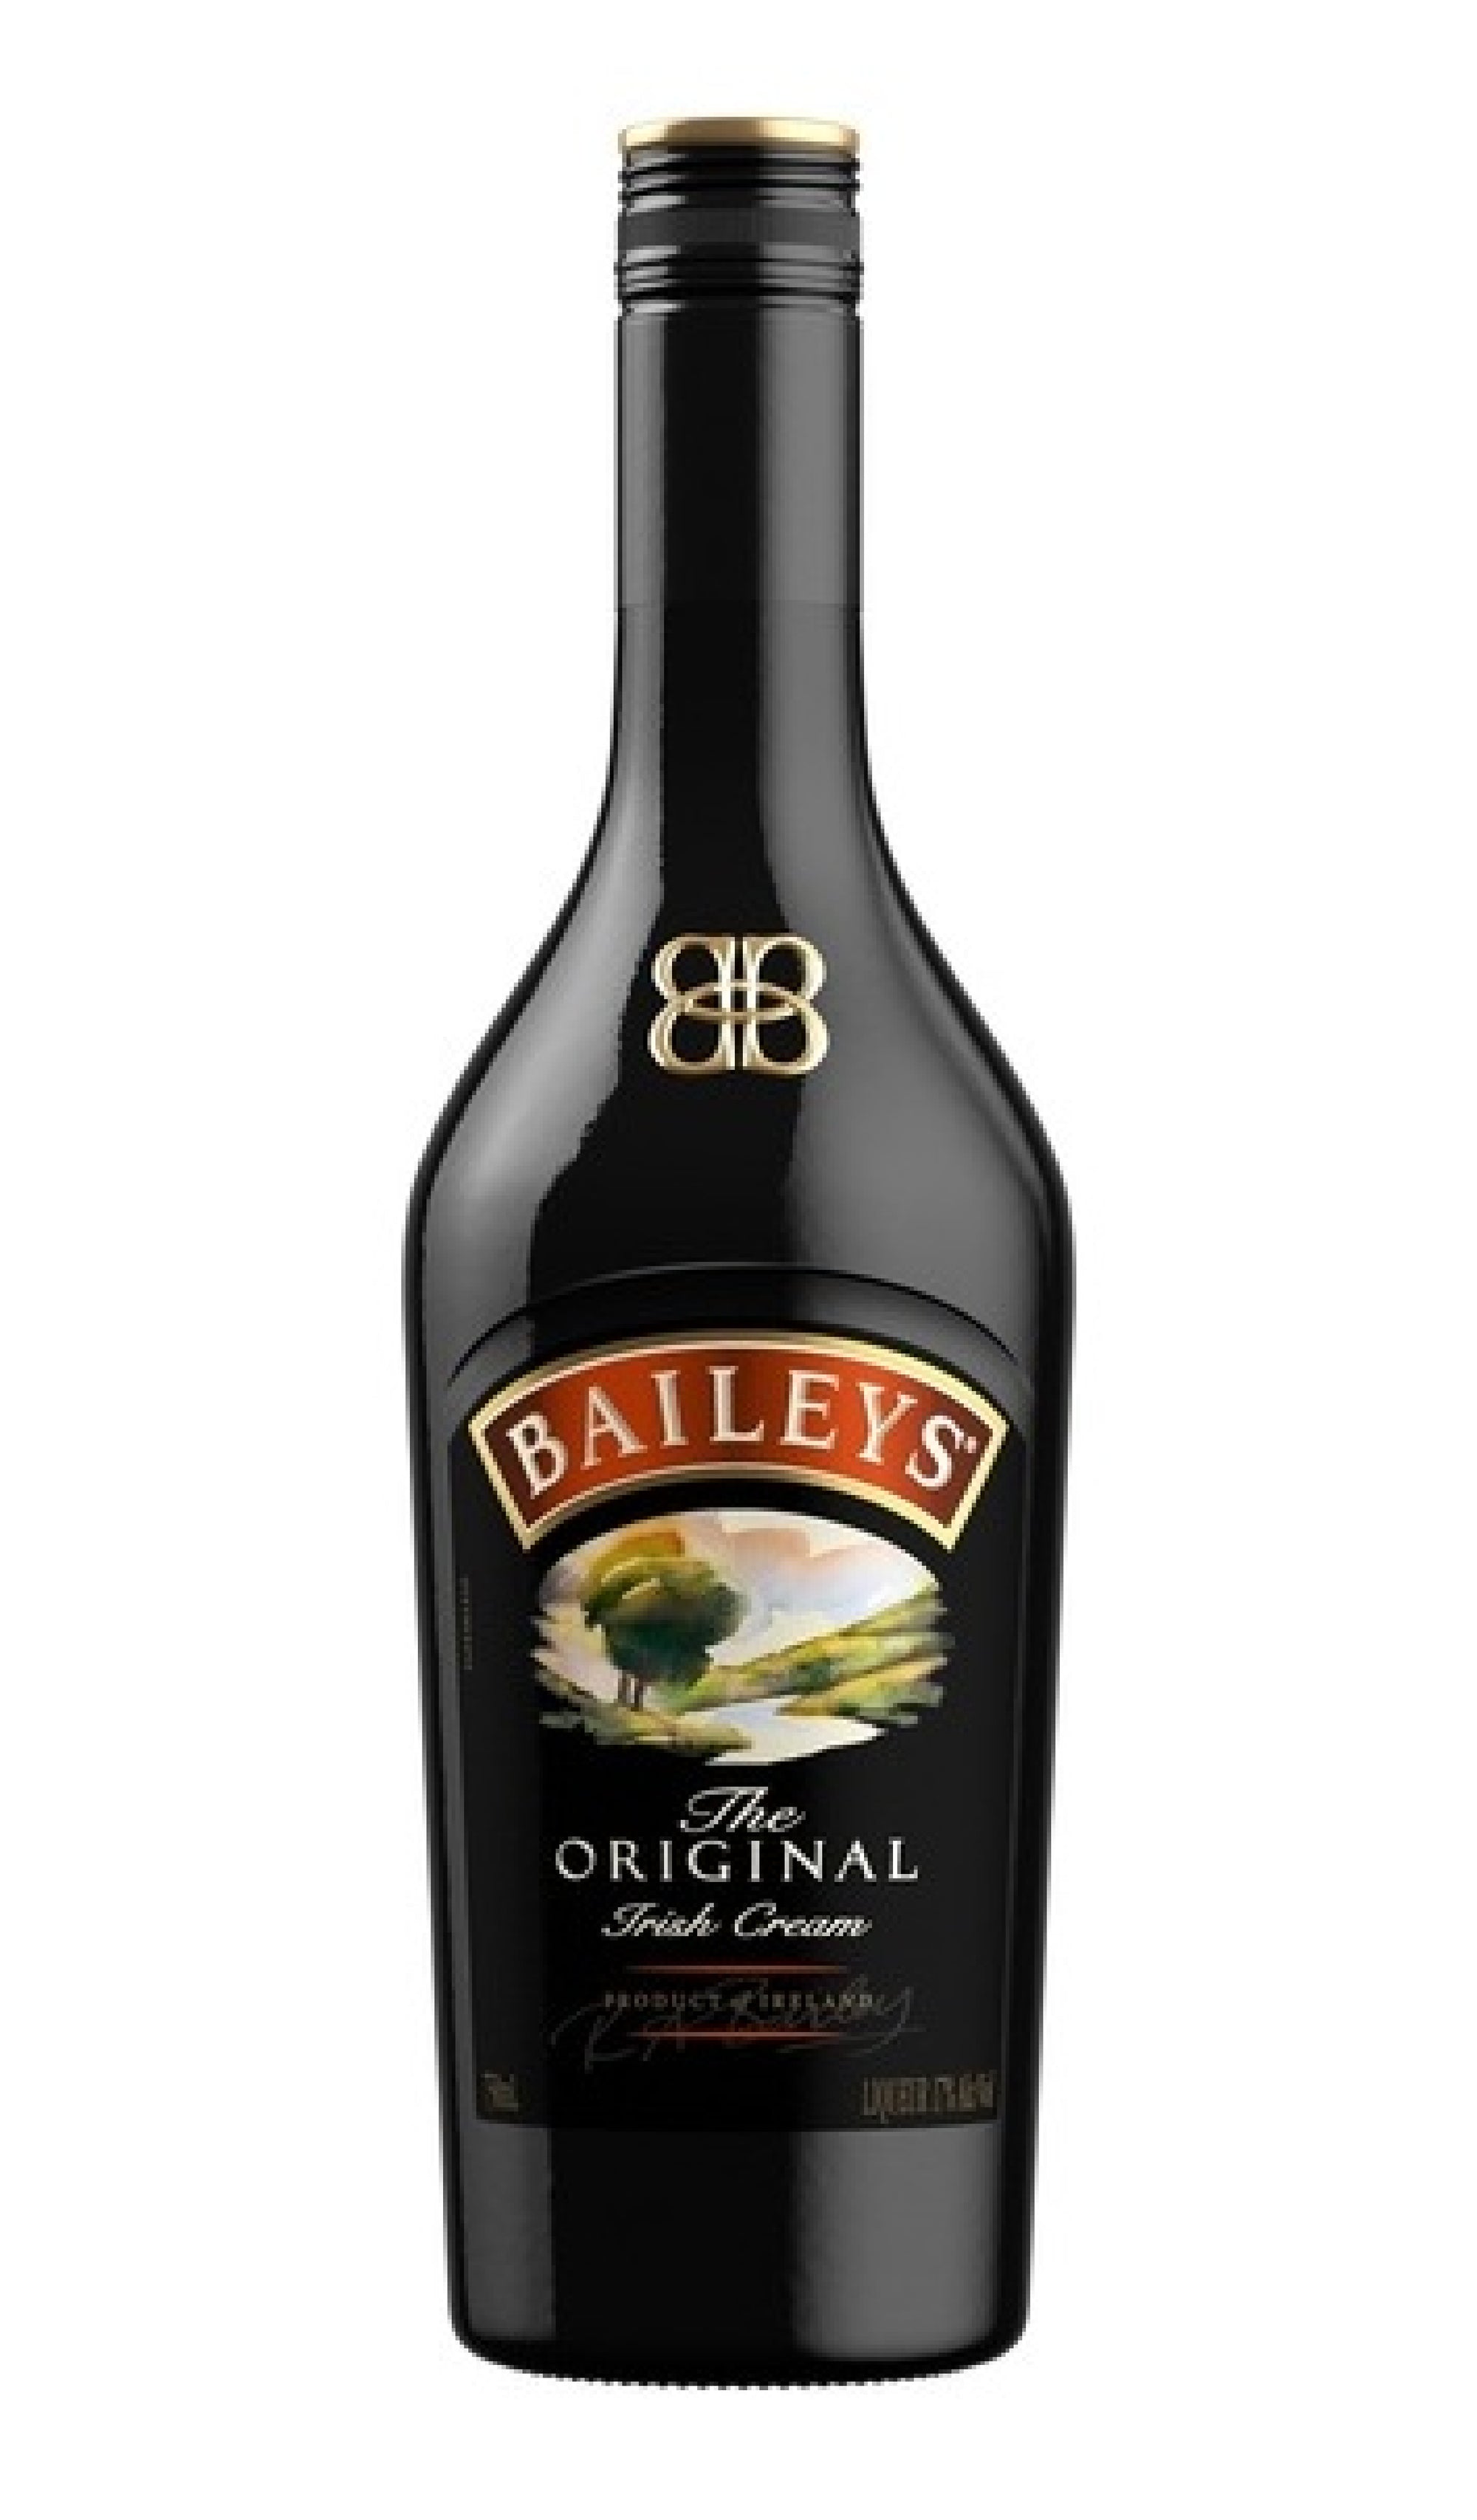 Baileys - "Original" Irish Cream (750ml)